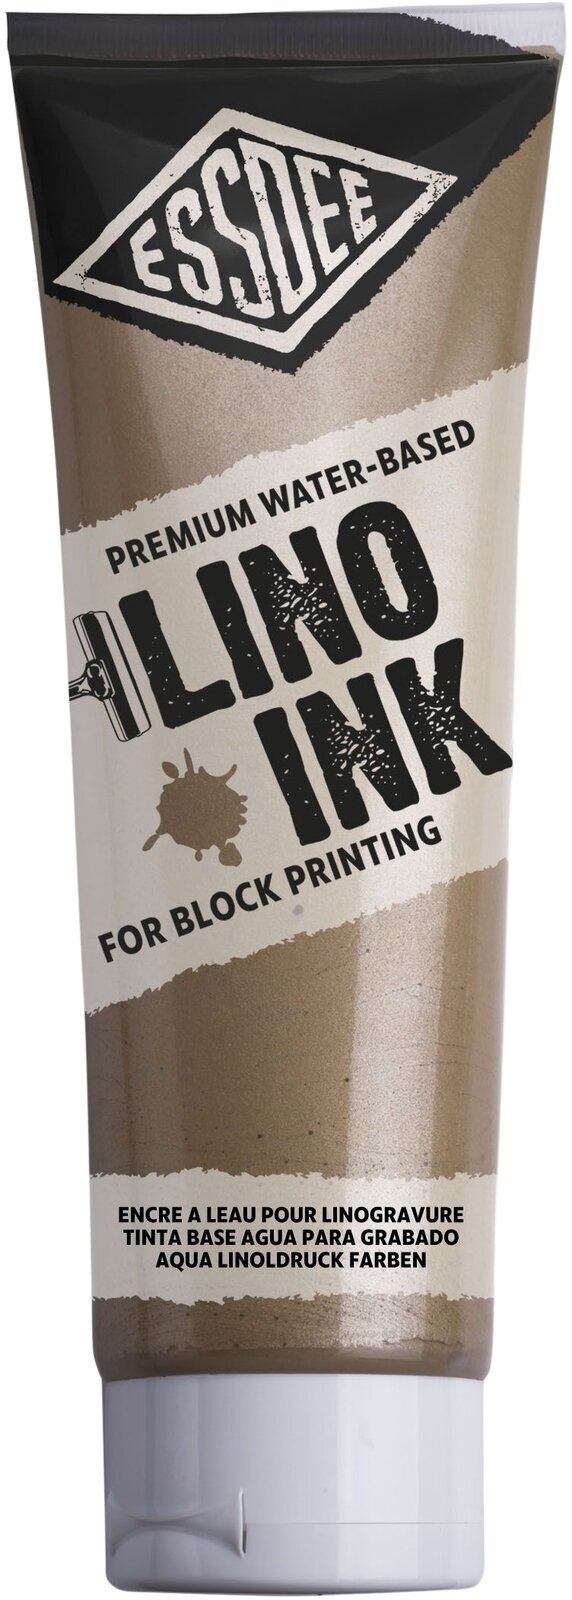 Tinta para linogravura Essdee Block Printing Ink Tinta para linogravura Metallic Gold 300 ml